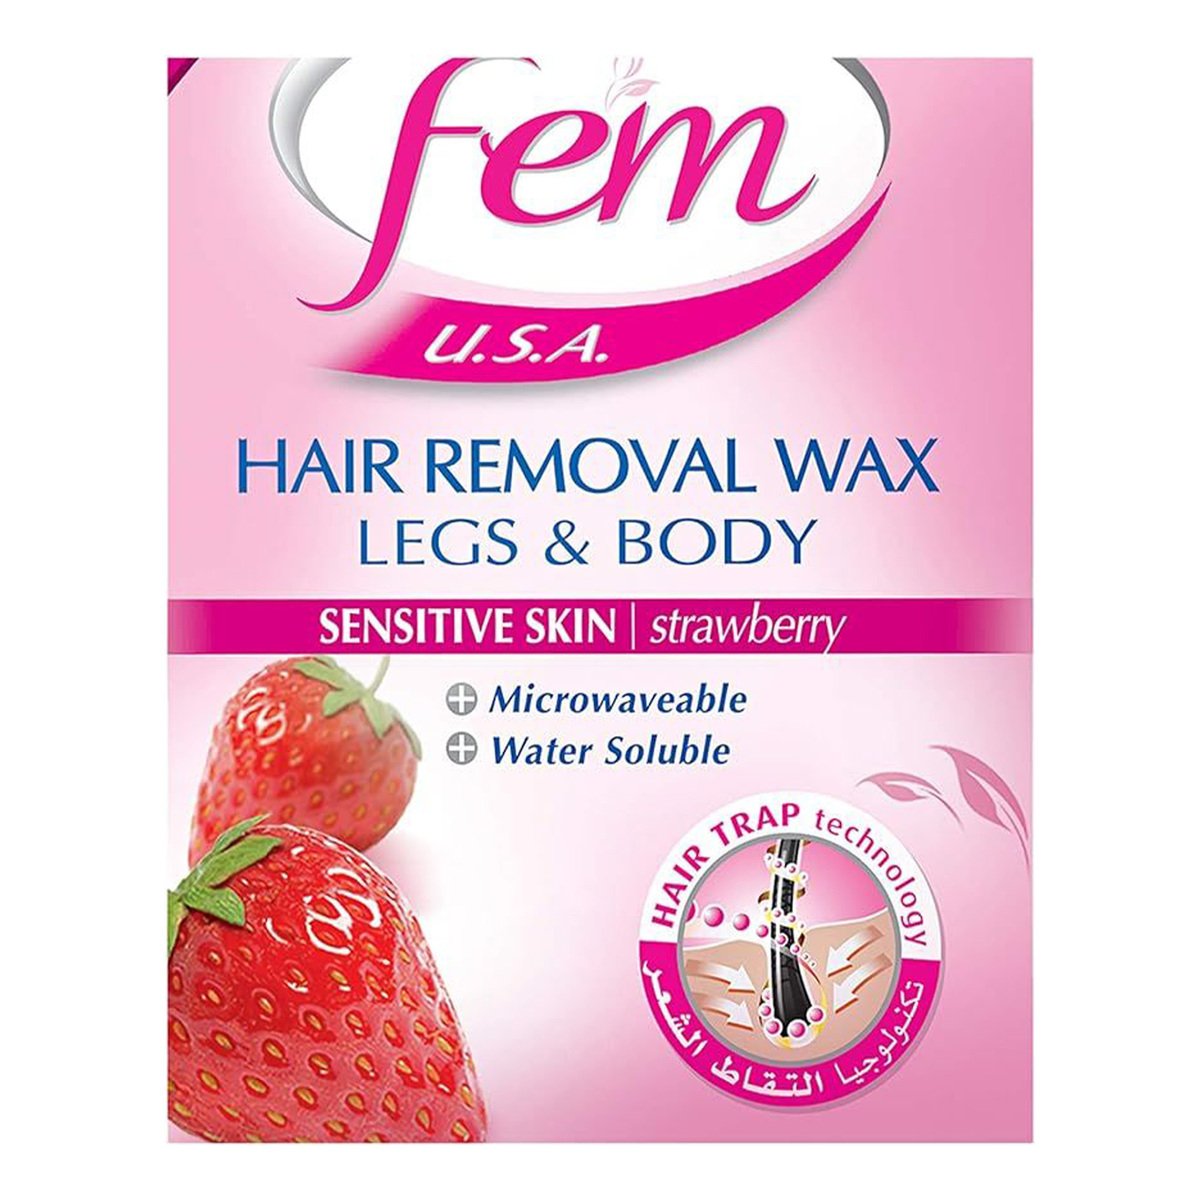 Fem USA Hair Remover Wax Sensitive Skin Strawberry 450 g